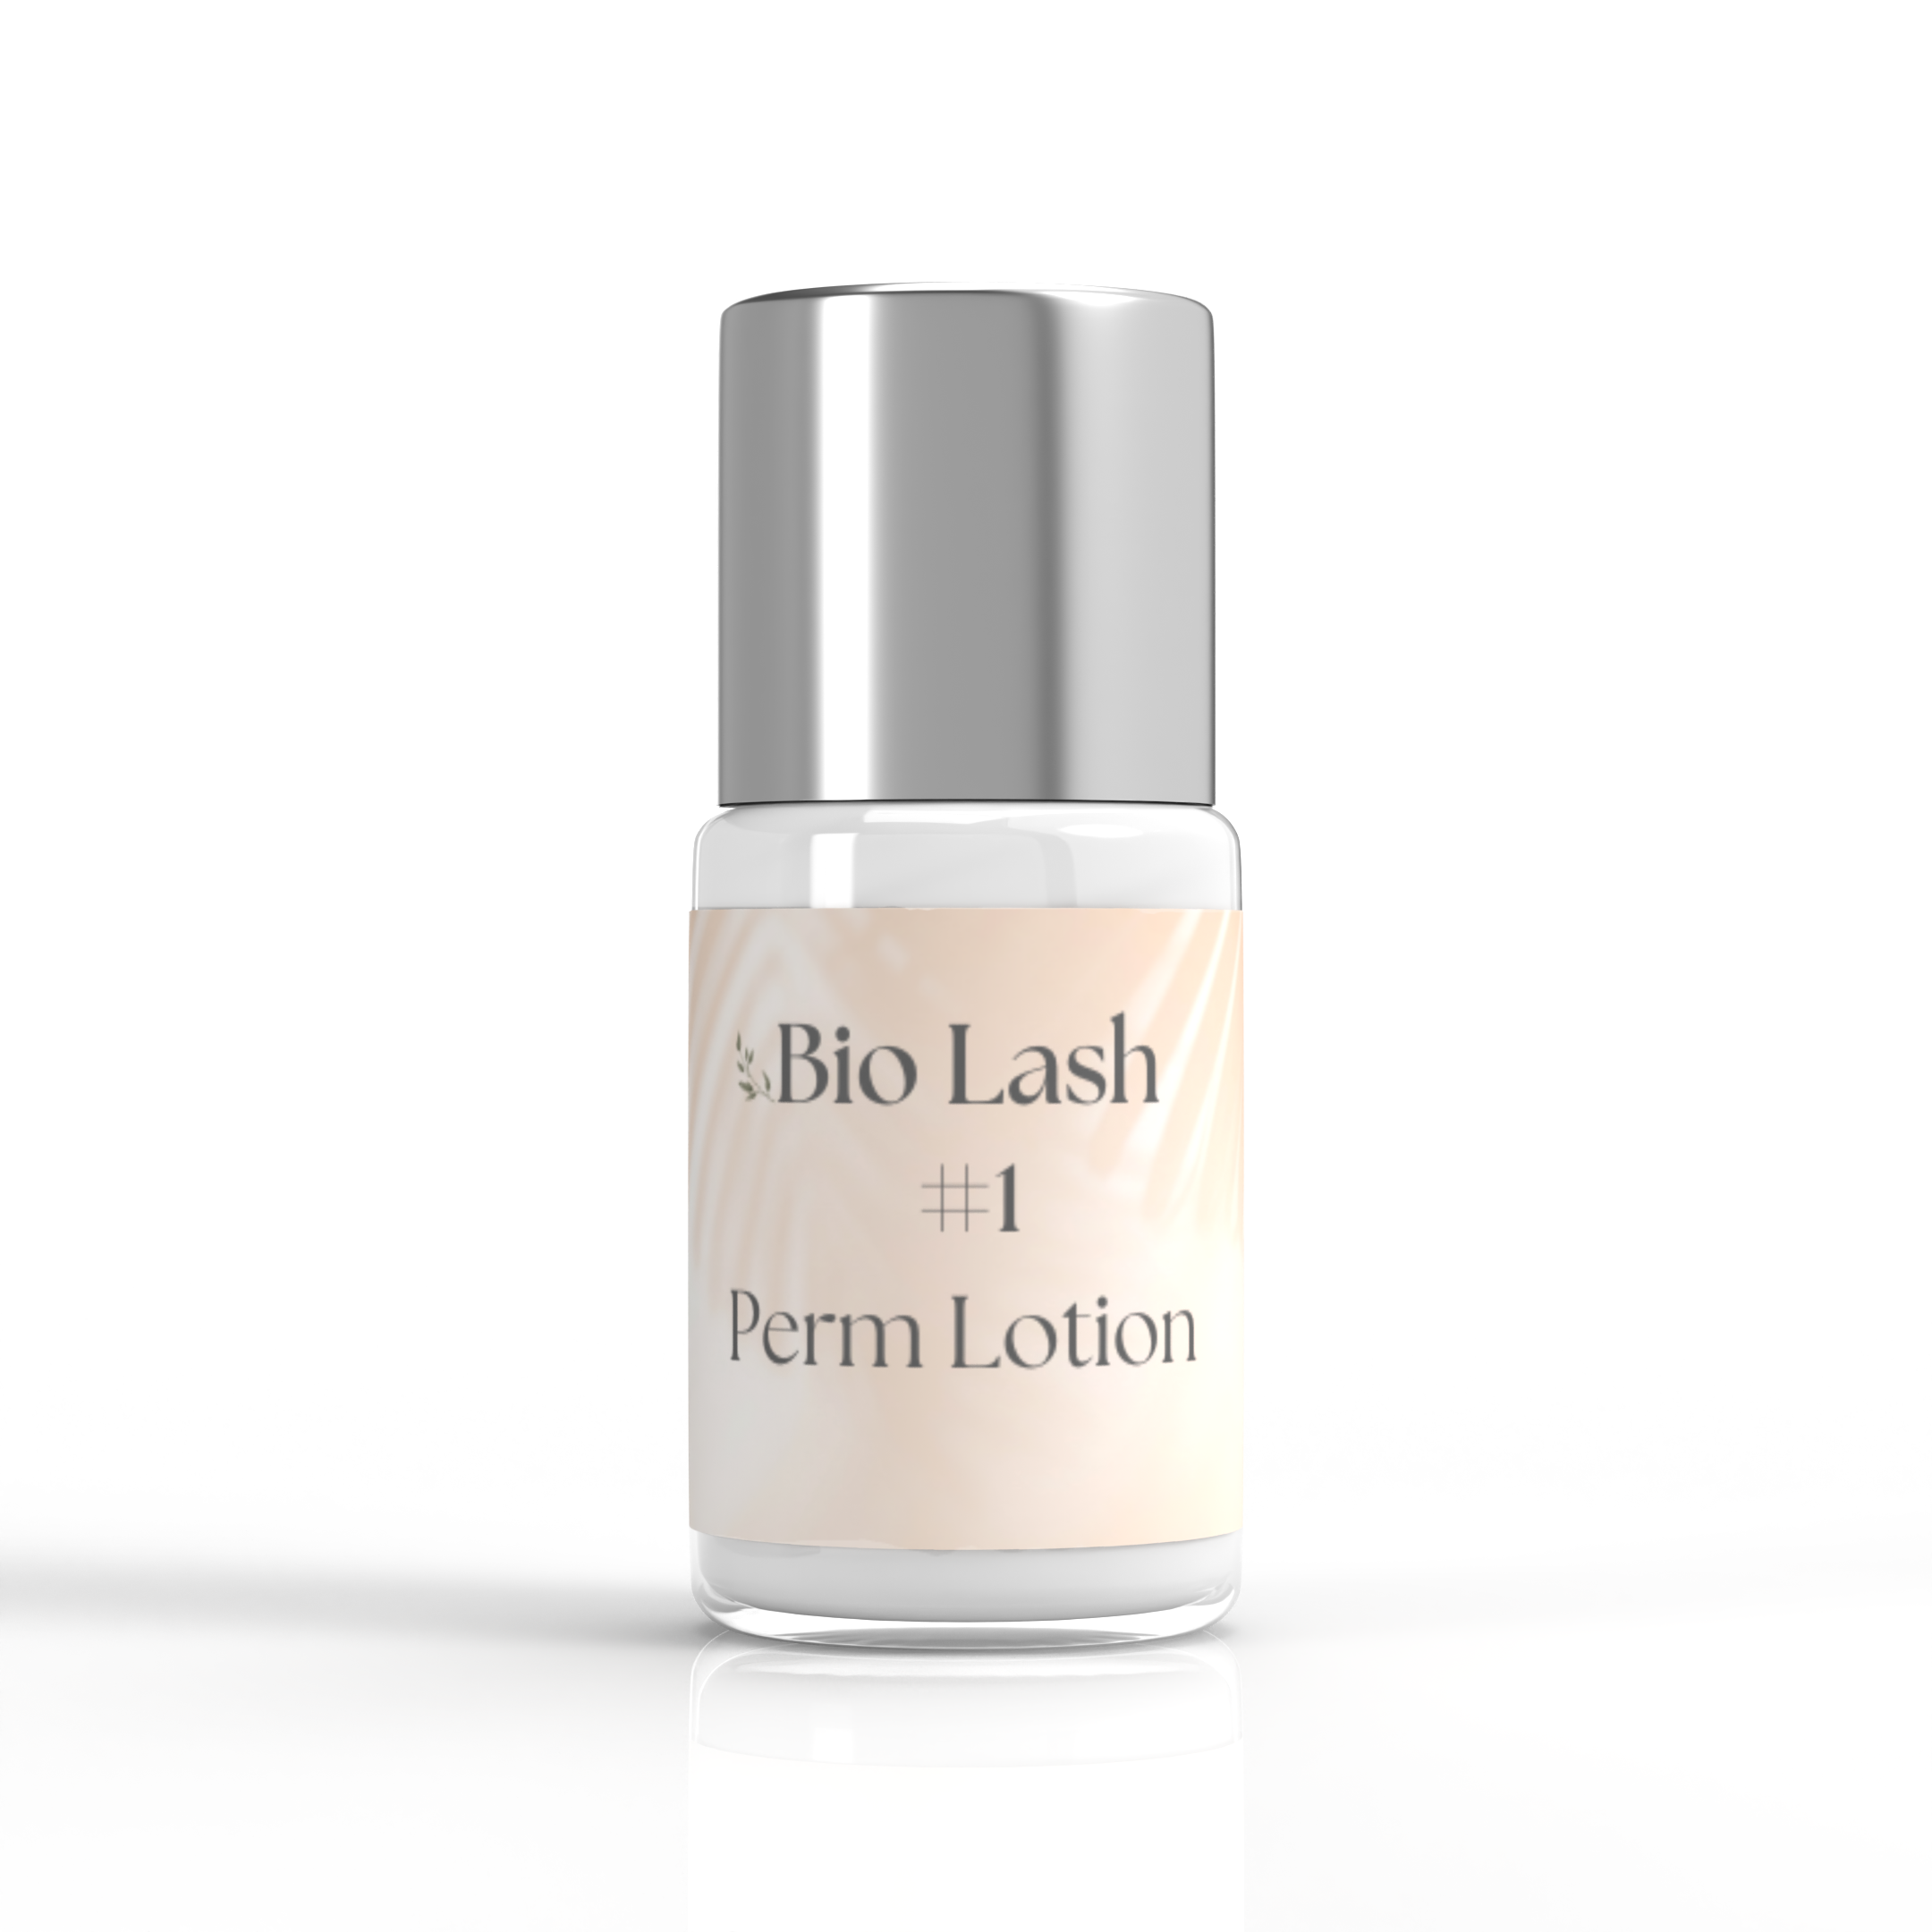 Bio Lash Lift Refil #1 Permanent Lotion